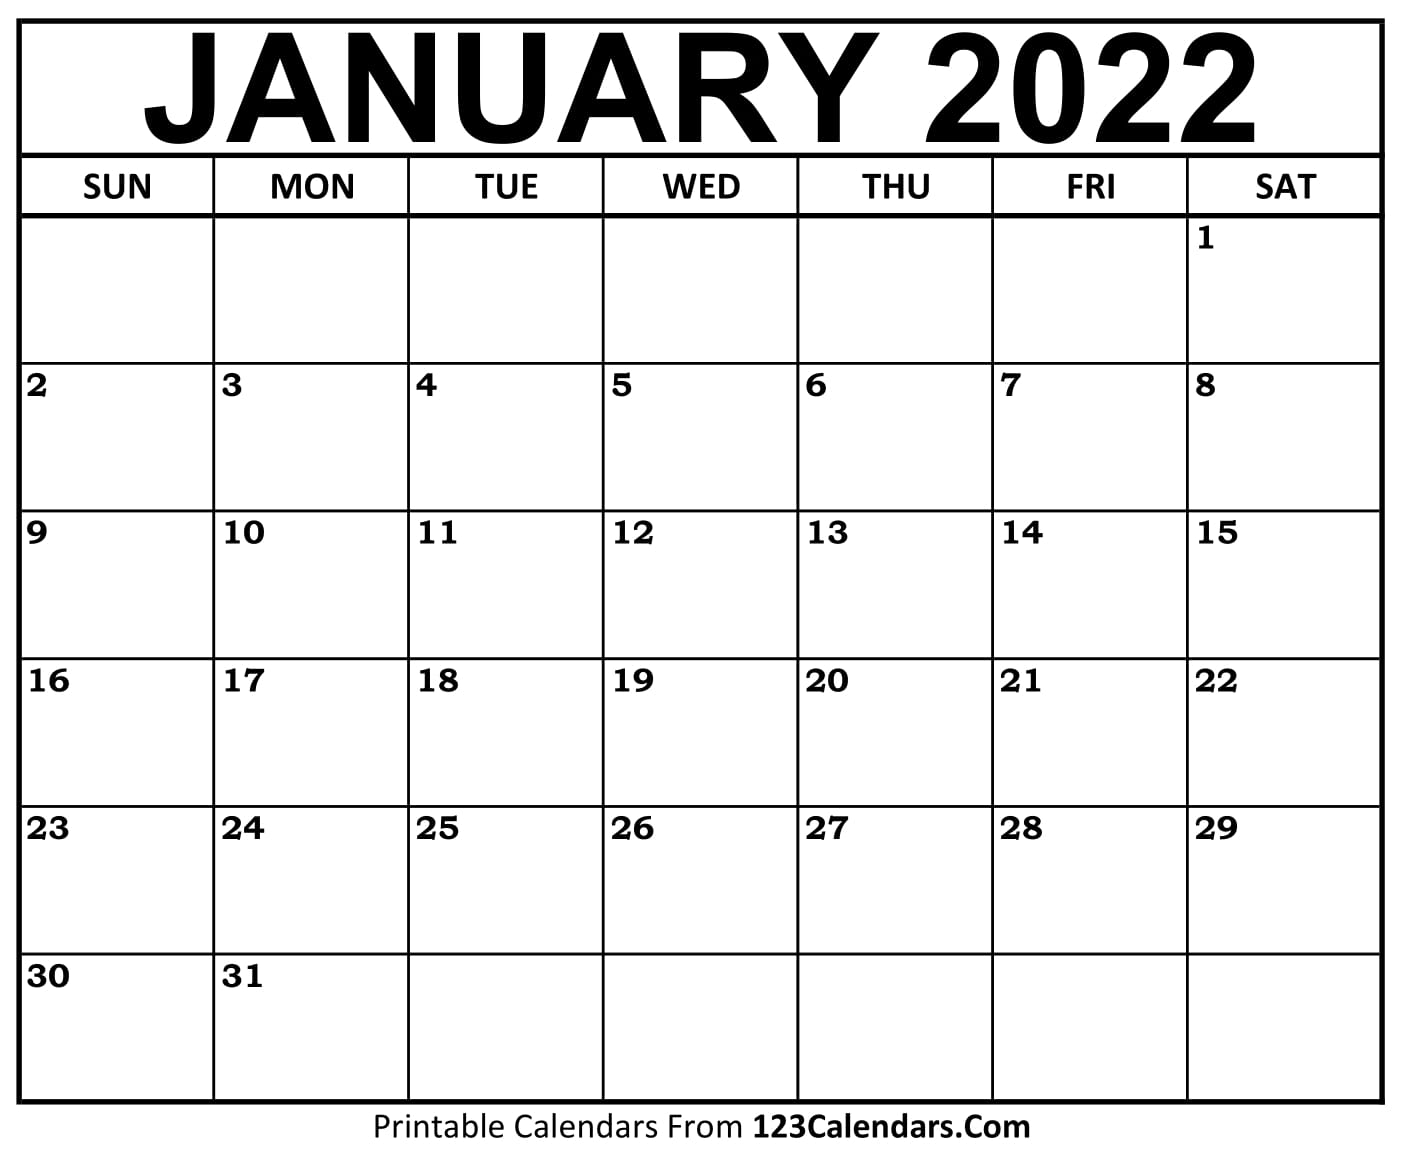 Free Printable Calendar 2022 January.Printable January 2022 Calendar Templates 123calendars Com